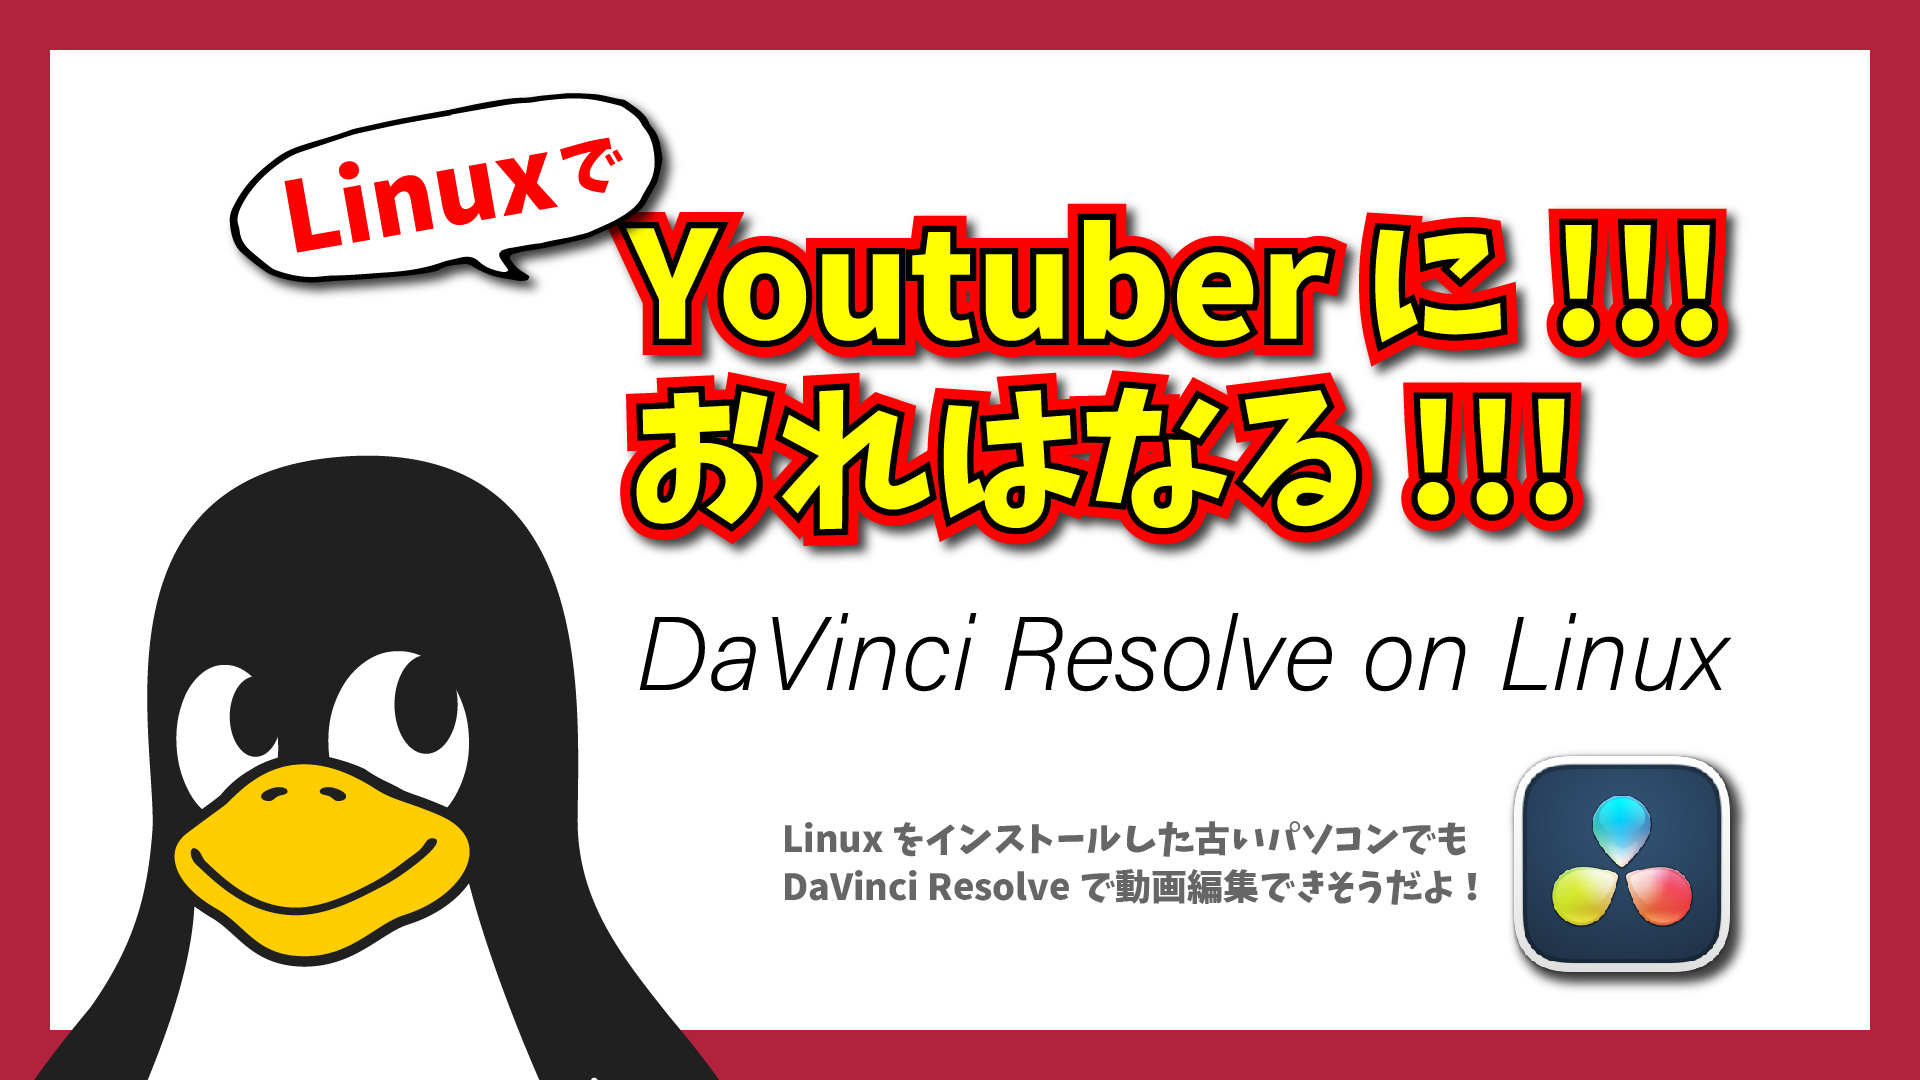 Linux で Youtuber に!!! おれはなる!!! ～DaVinci Resolve on Linux～